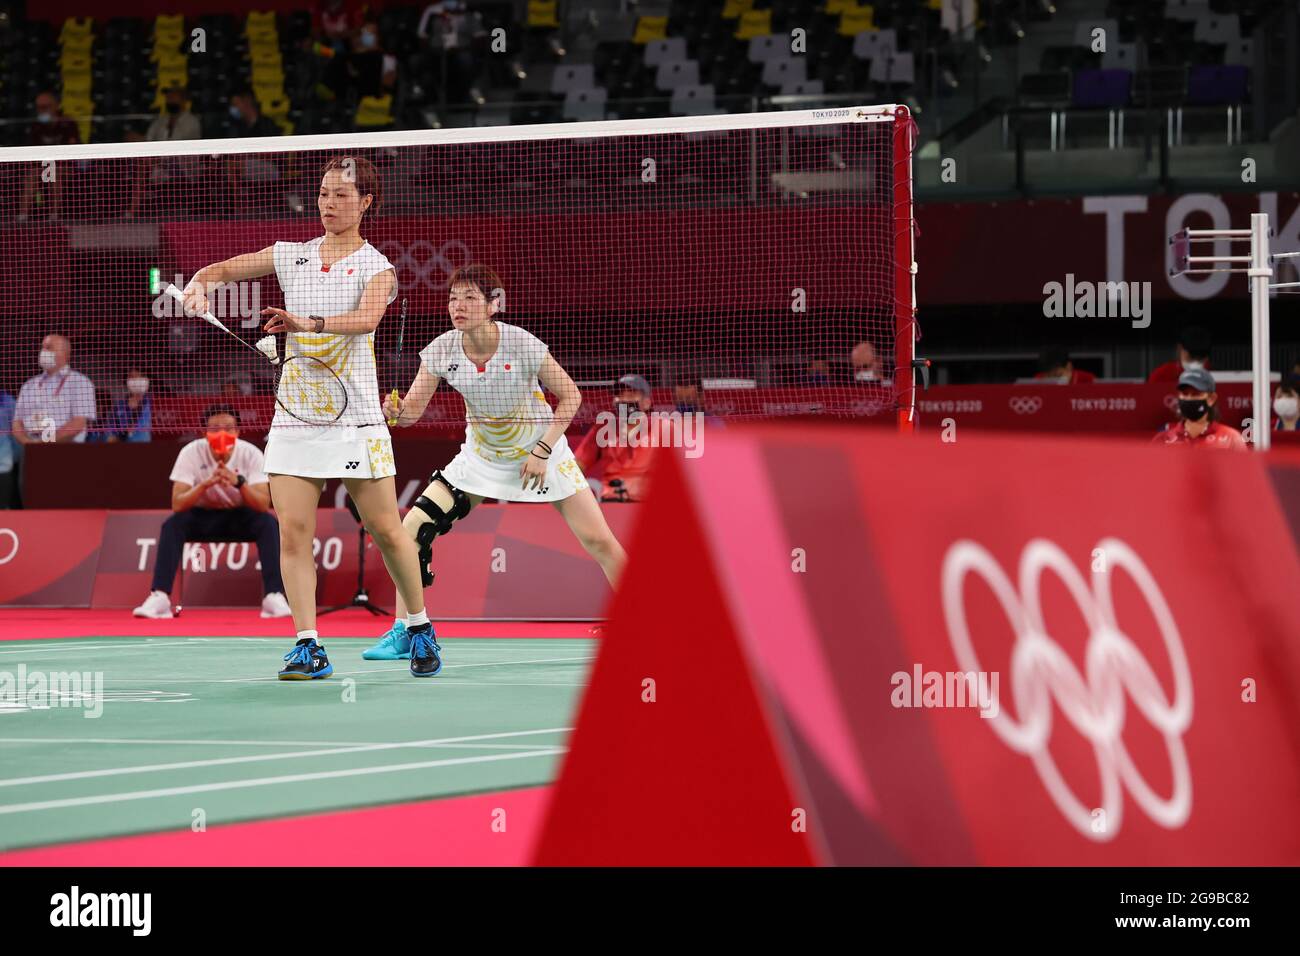 Olympics 2021 live badminton